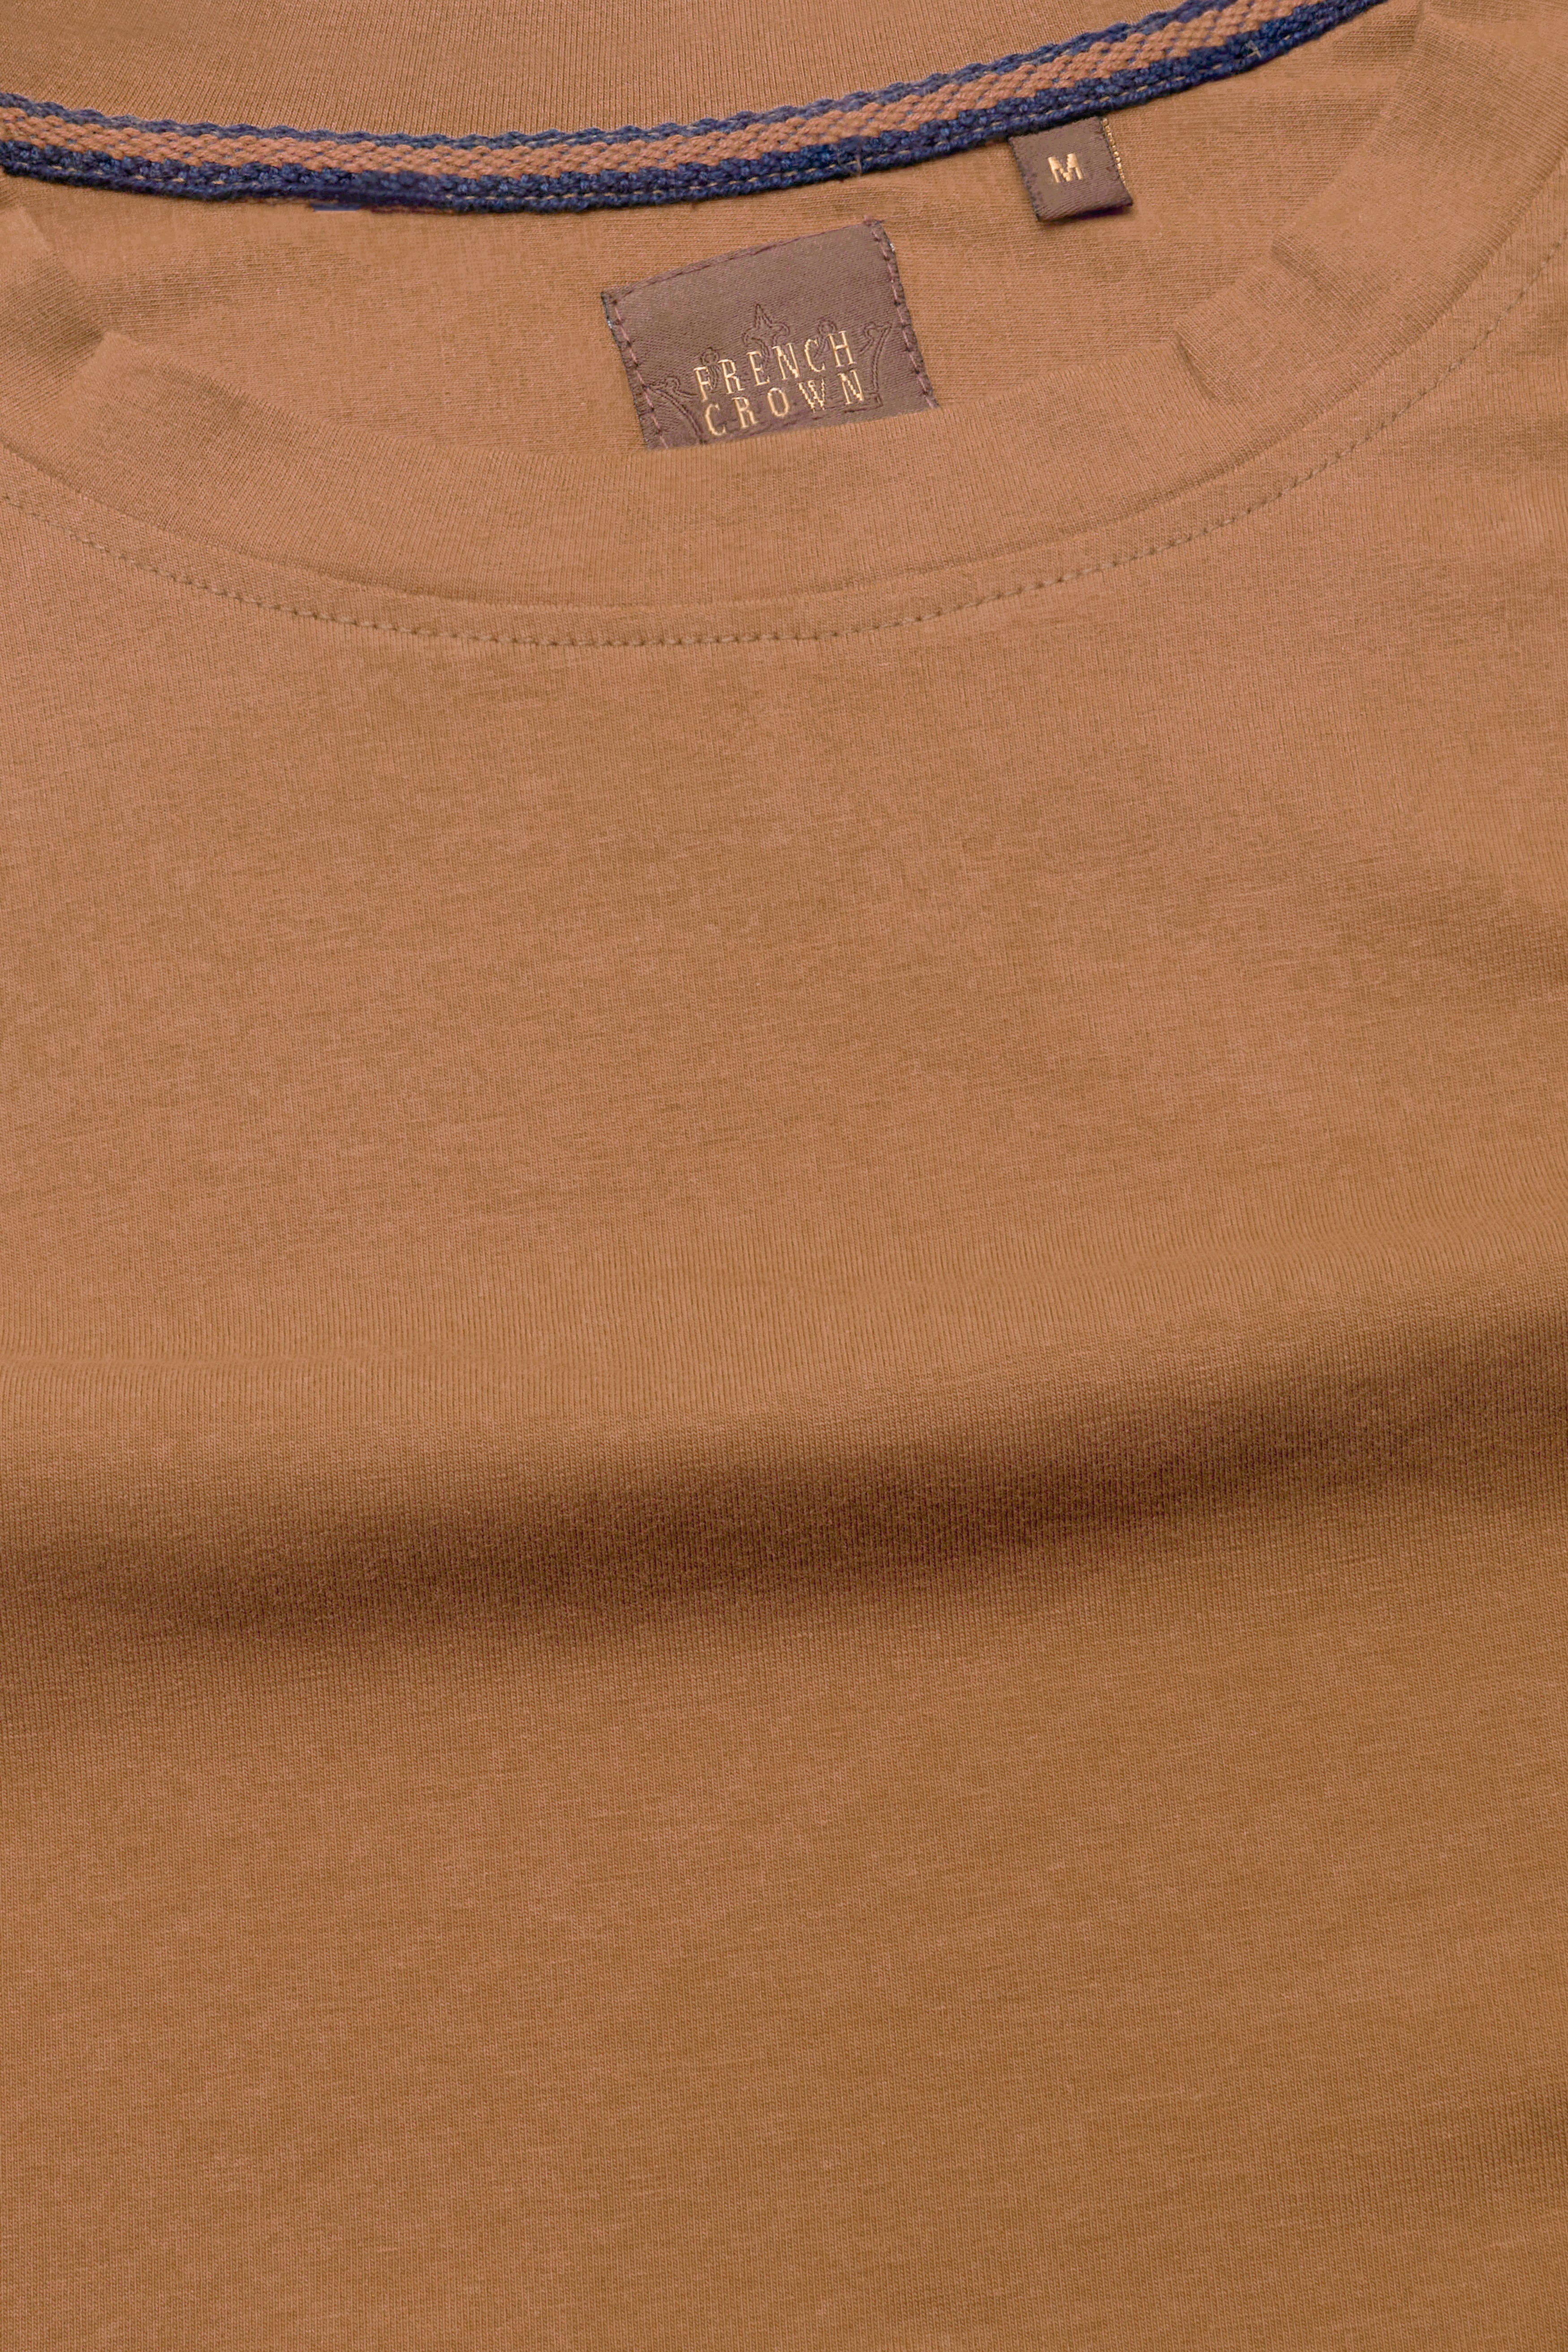 Sepia Brown Printed Premium Cotton Oversized T-shirt TS951-S, TS951-M, TS951-L, TS951-XL, TS951-XXL